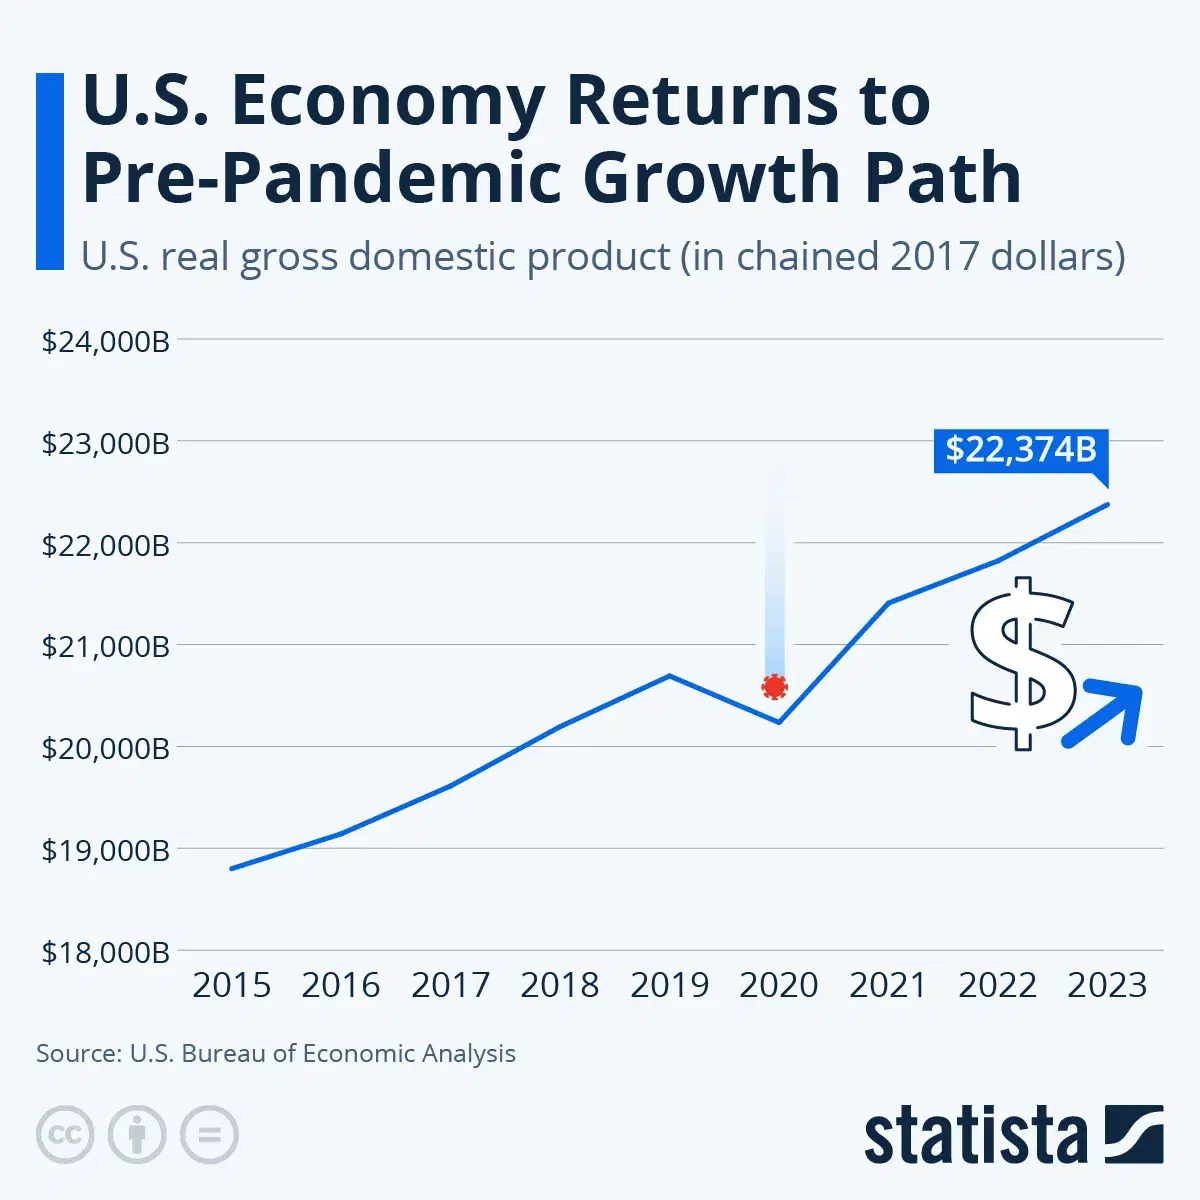 U.S. Economy Returns to Pre-Pandemic Growth Path